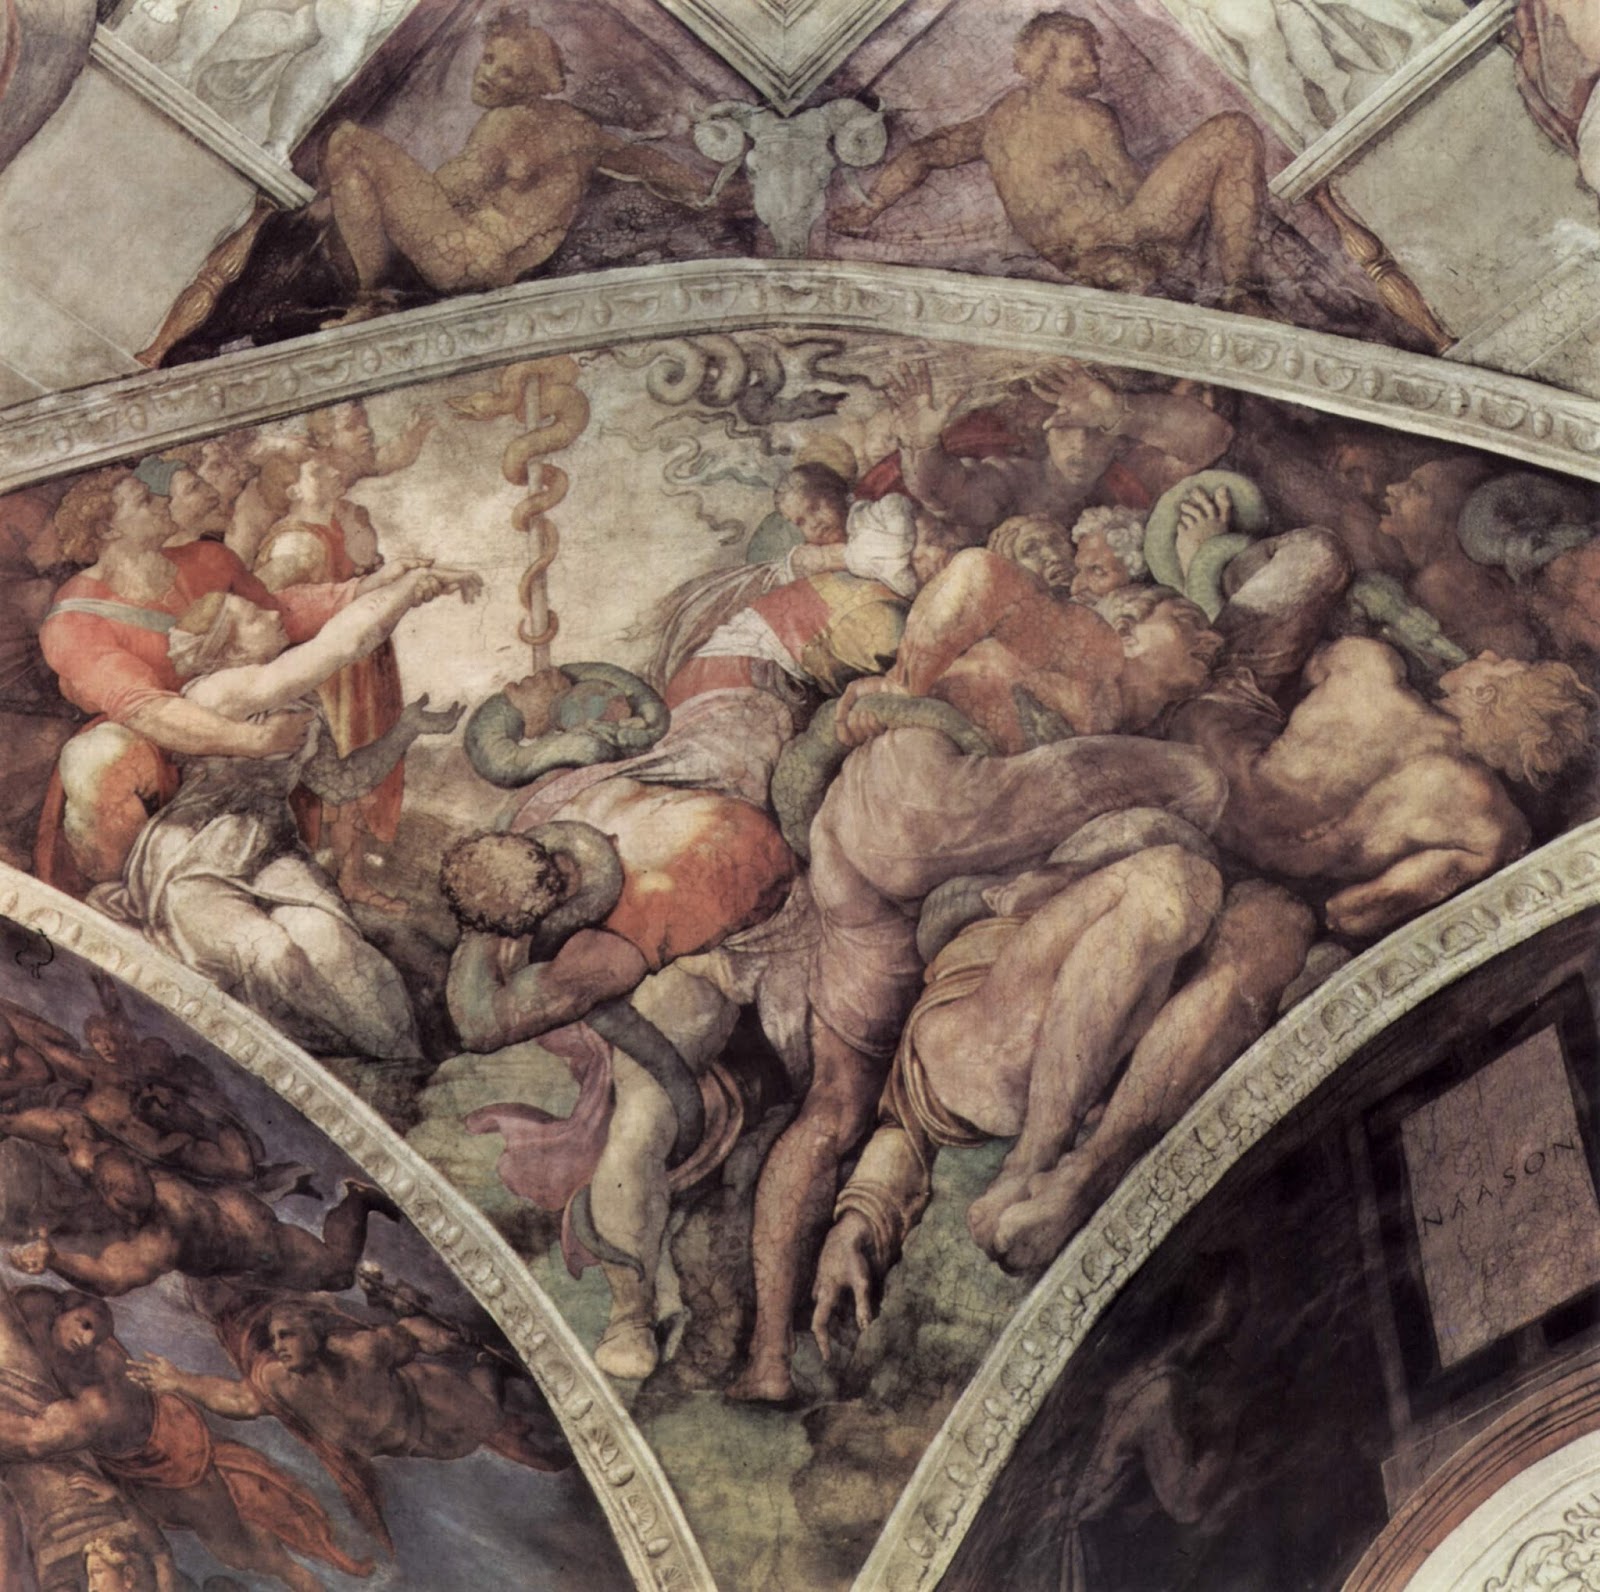 Michelangelo+Buonarroti-1475-1564 (356).jpg